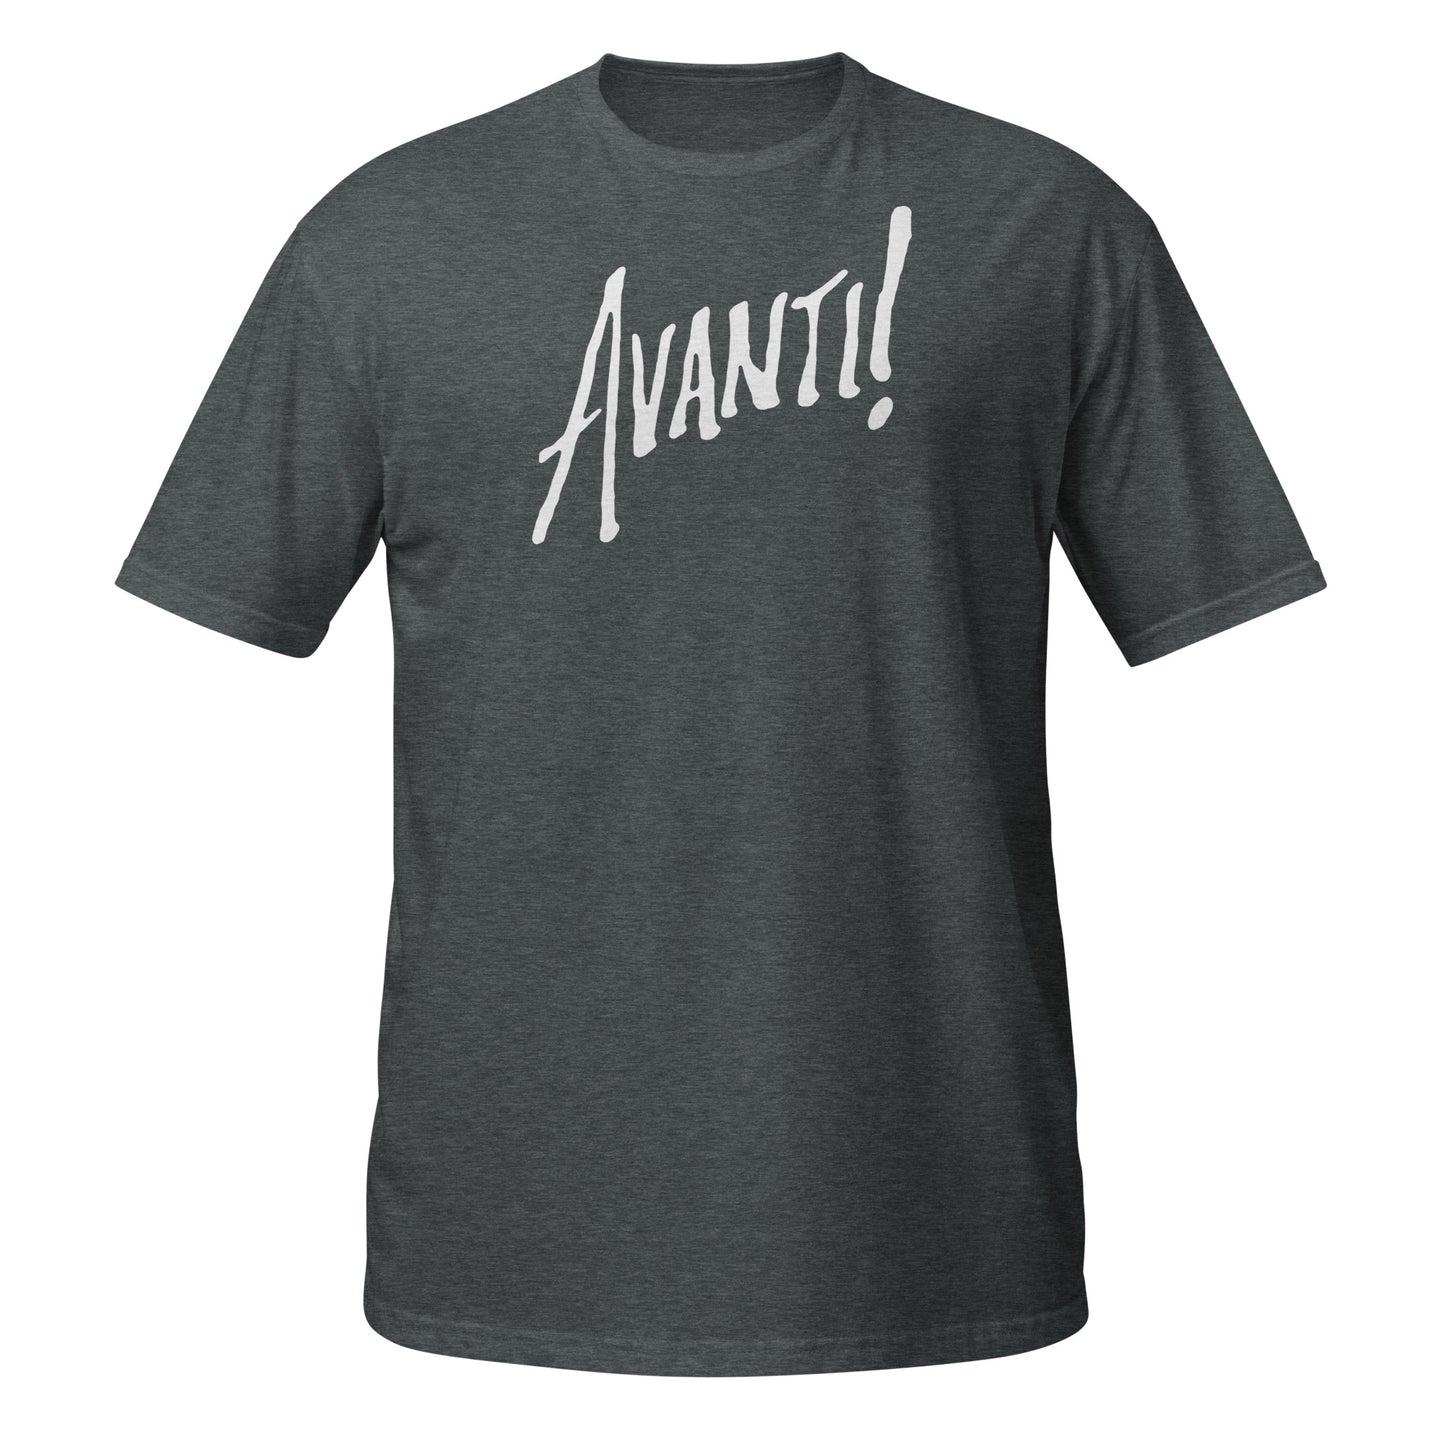 "Avanti" unisex t-shirt